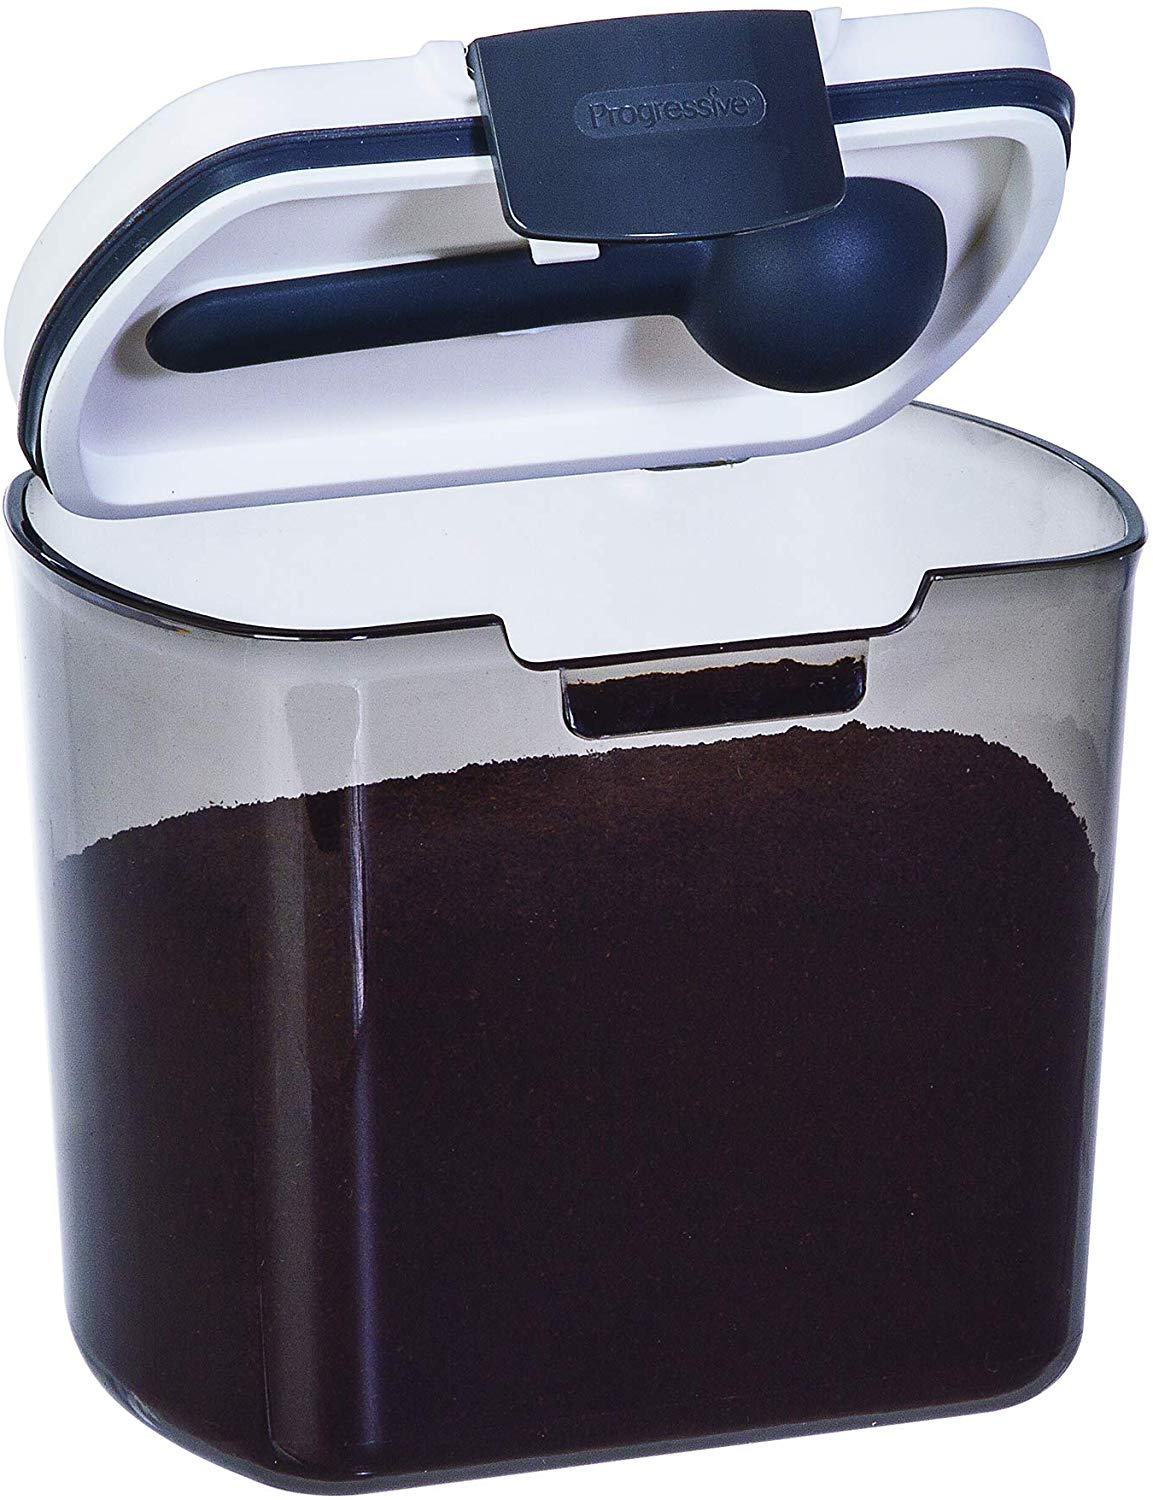 Progressive Large Coffee ProKeeper Storage Container